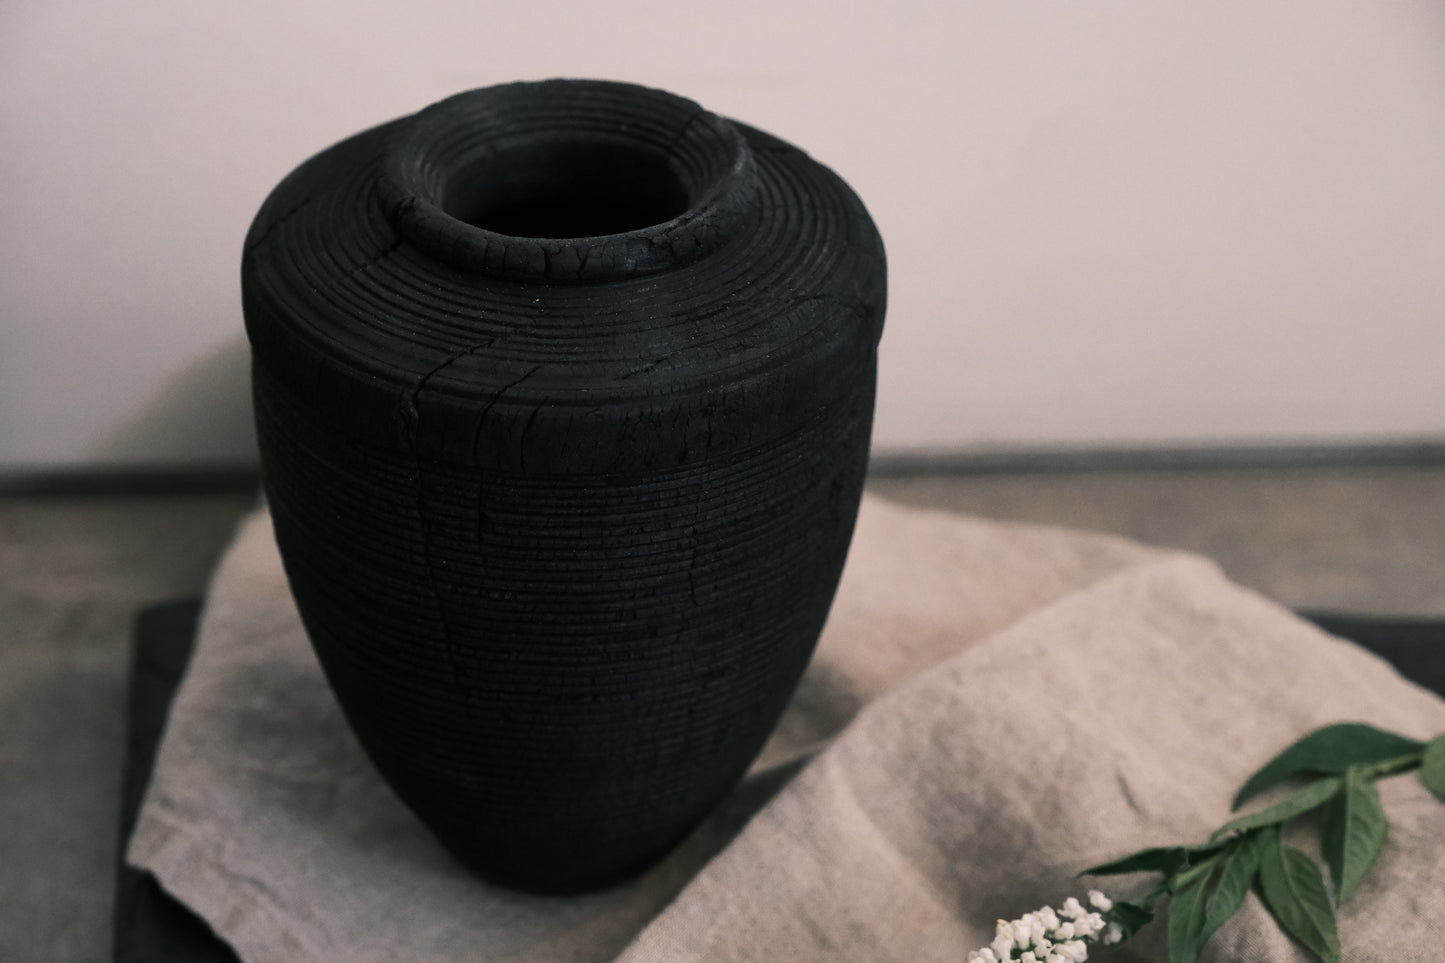 Image of Terra Cruda Red Gum Wooden Vase Vessel Decor